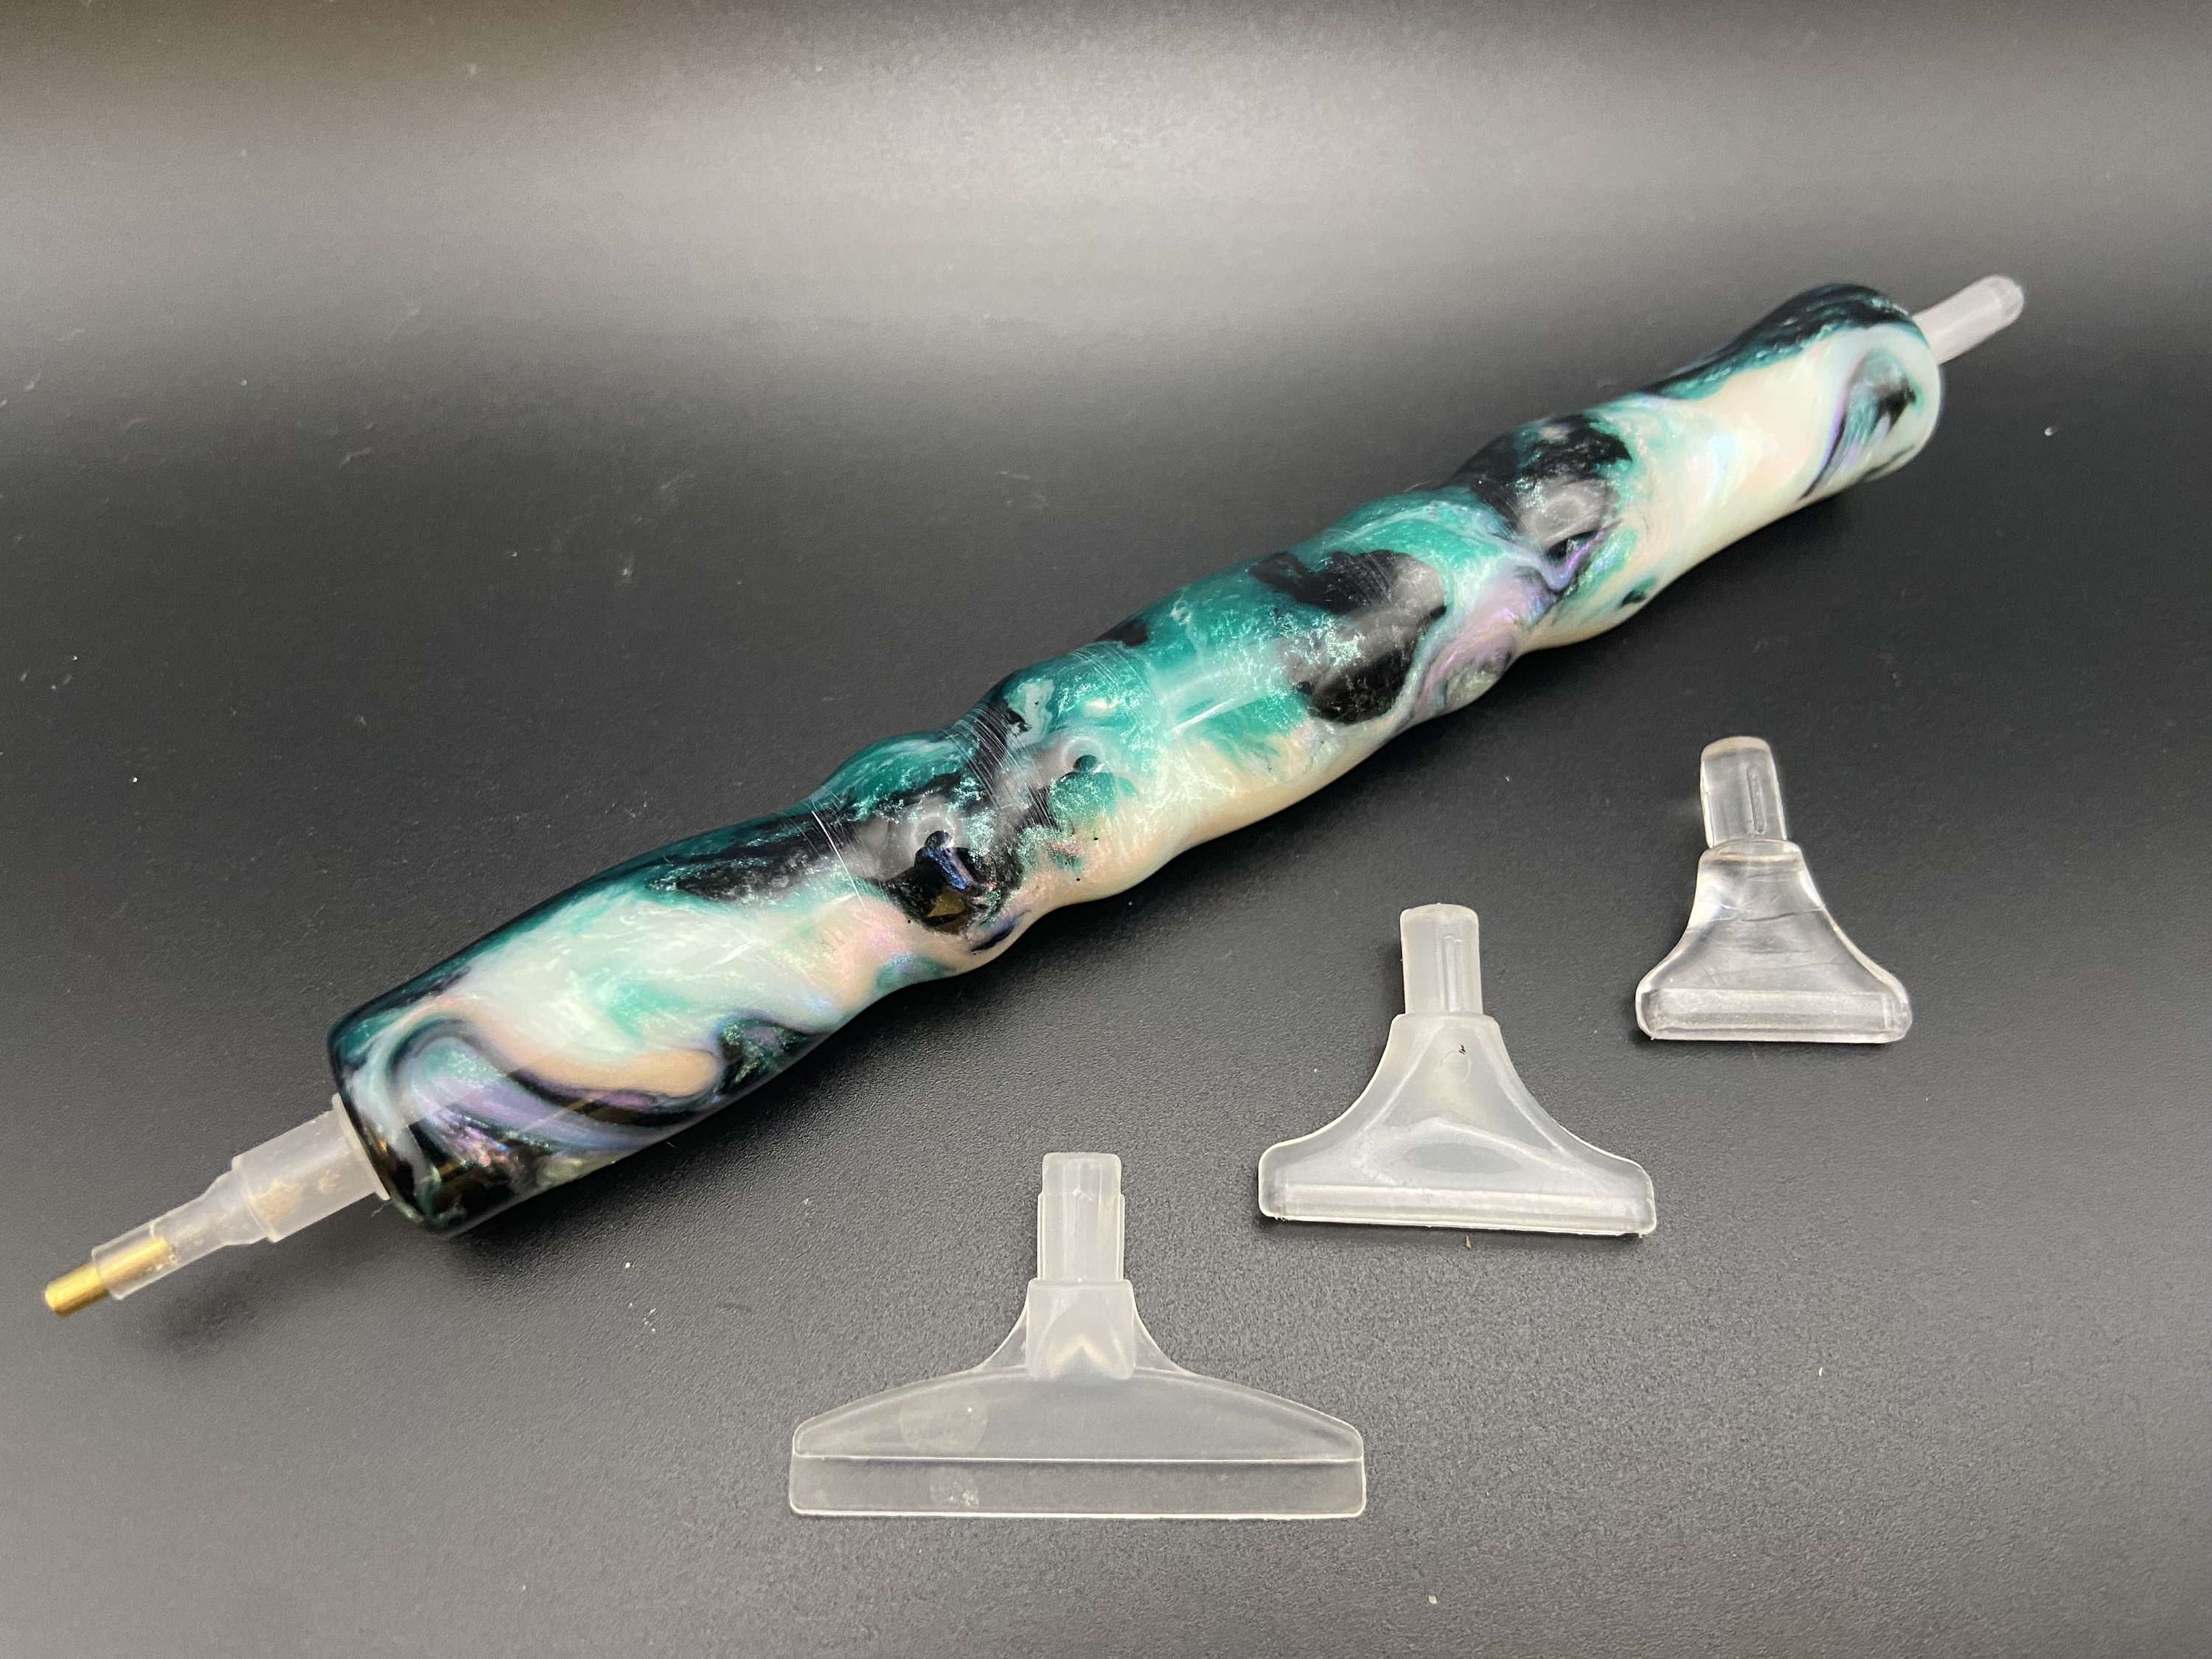 DIY Diamond Art Pen Resin Diamond Painting Pens.each Pen Includes